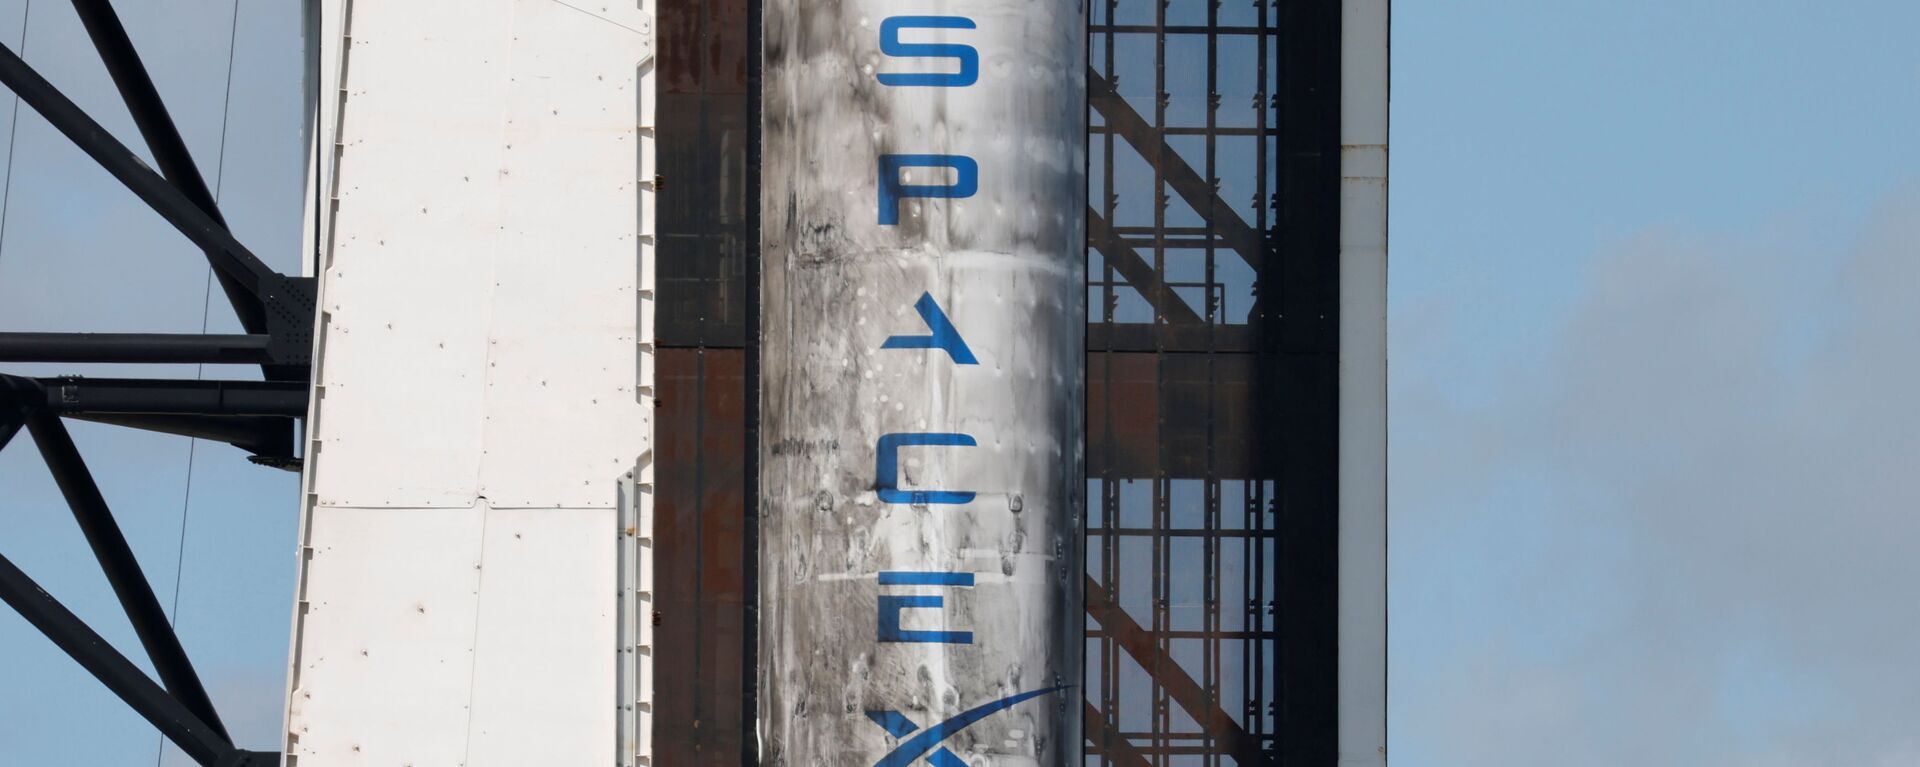 SpaceX在發現問題後改進載人龍飛船廁所 - 俄羅斯衛星通訊社, 1920, 26.10.2021